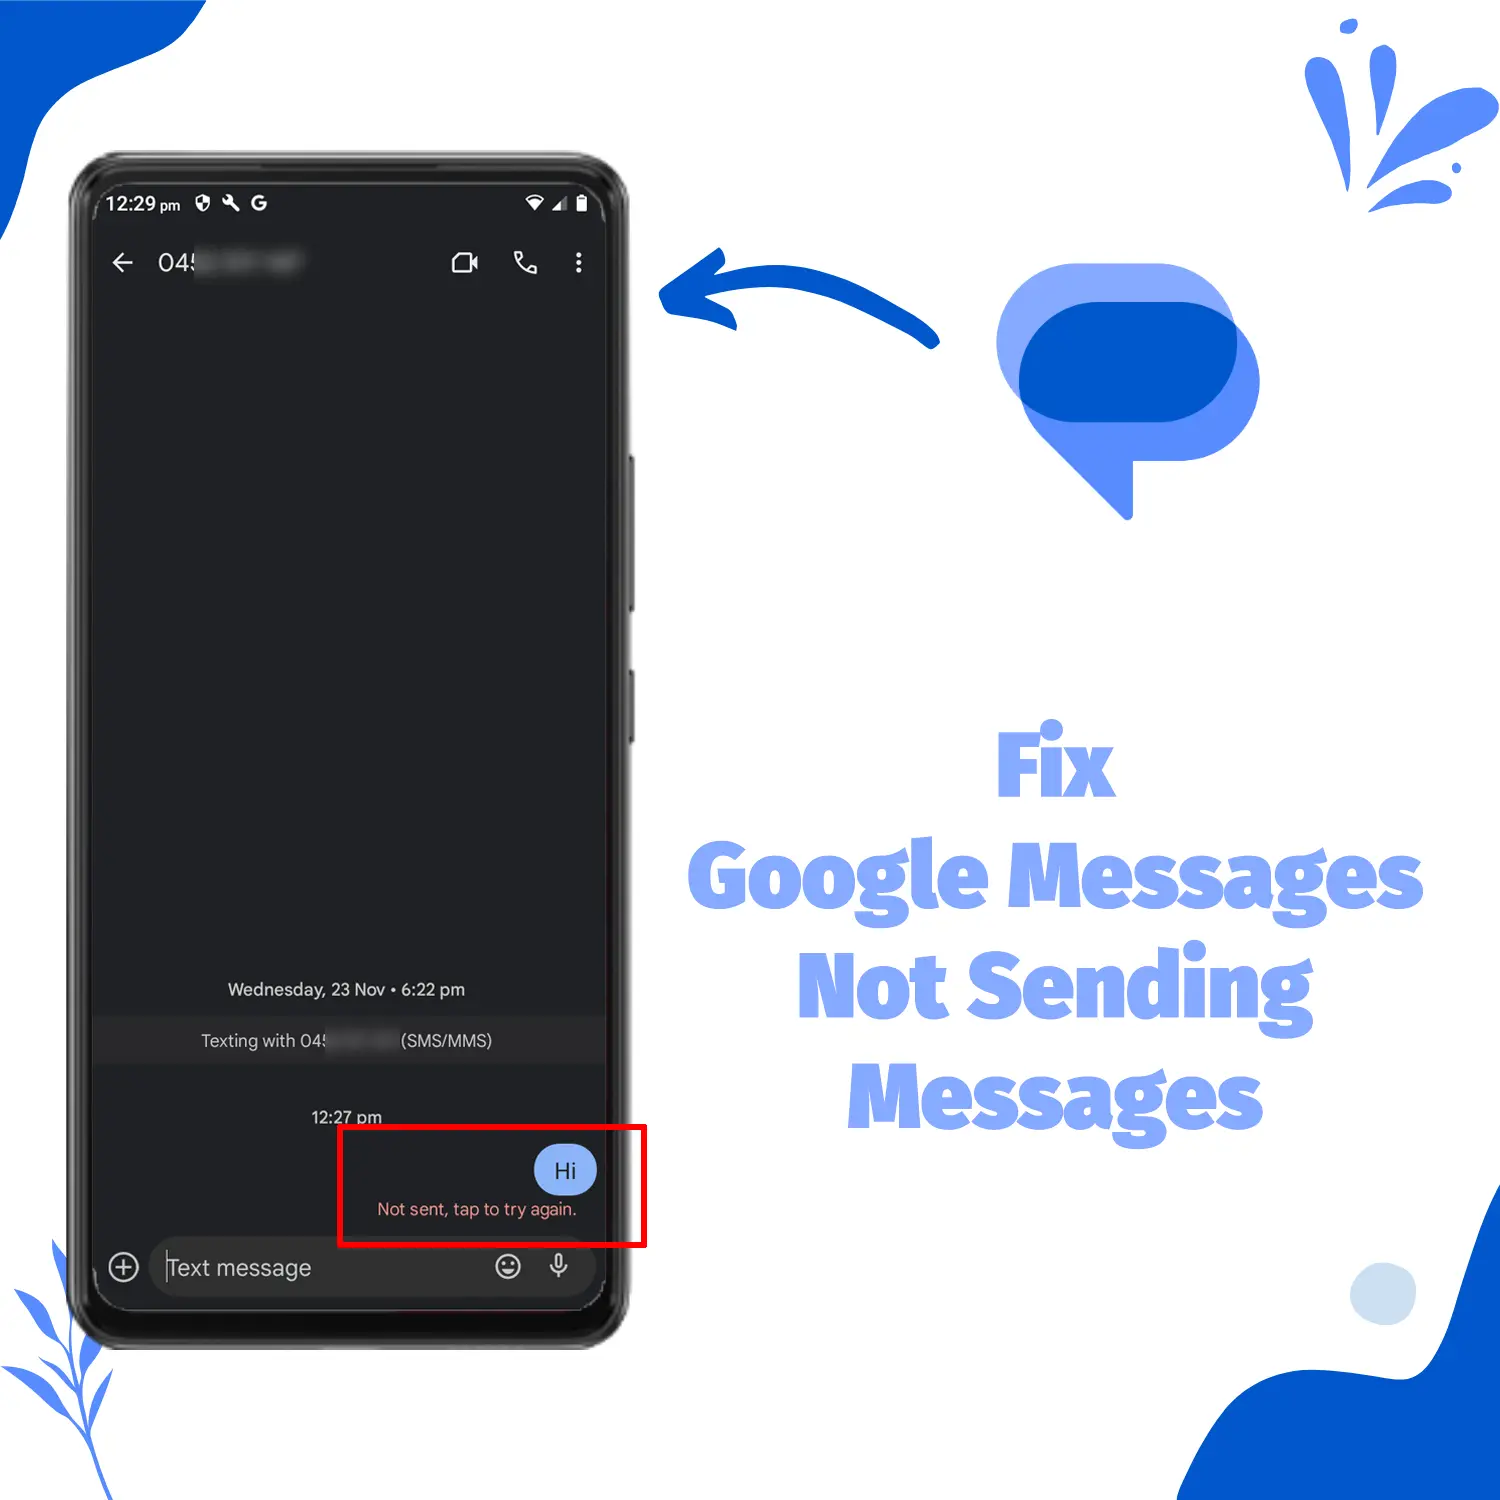 9 Ways to Fix Google Messages Not Sending Messages